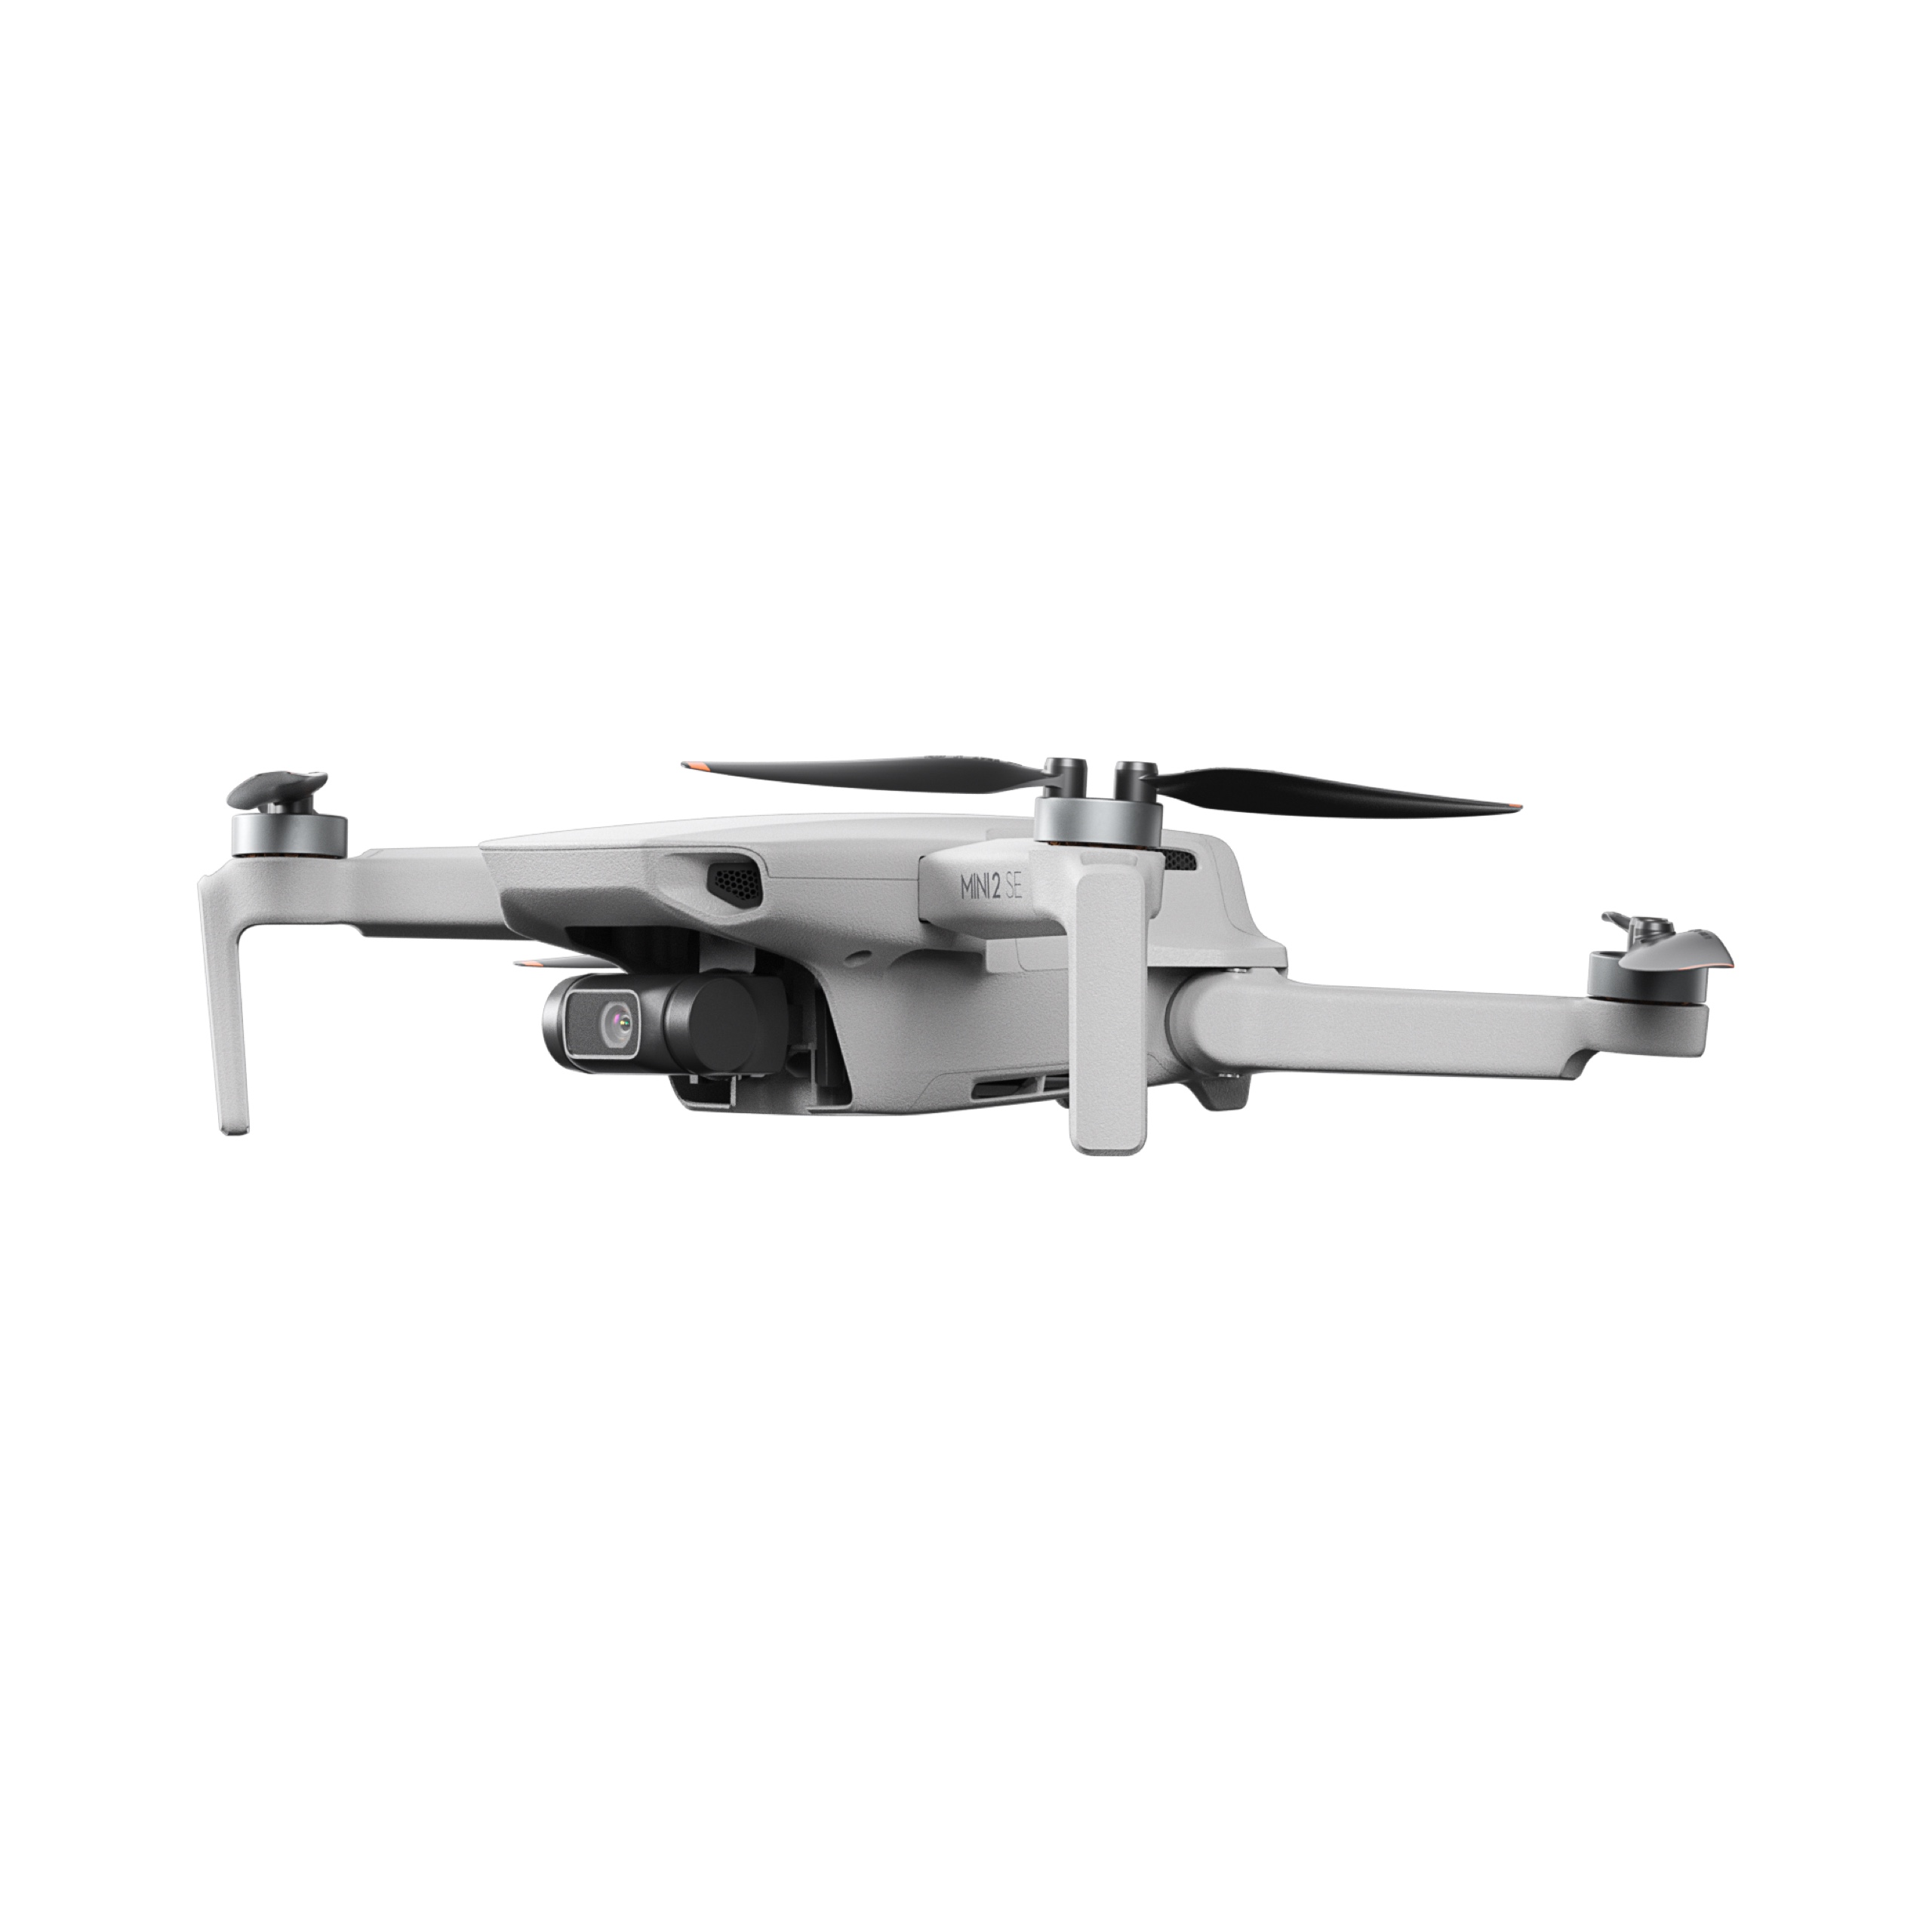 Drone DJI Mini 2 SE - ModelForce